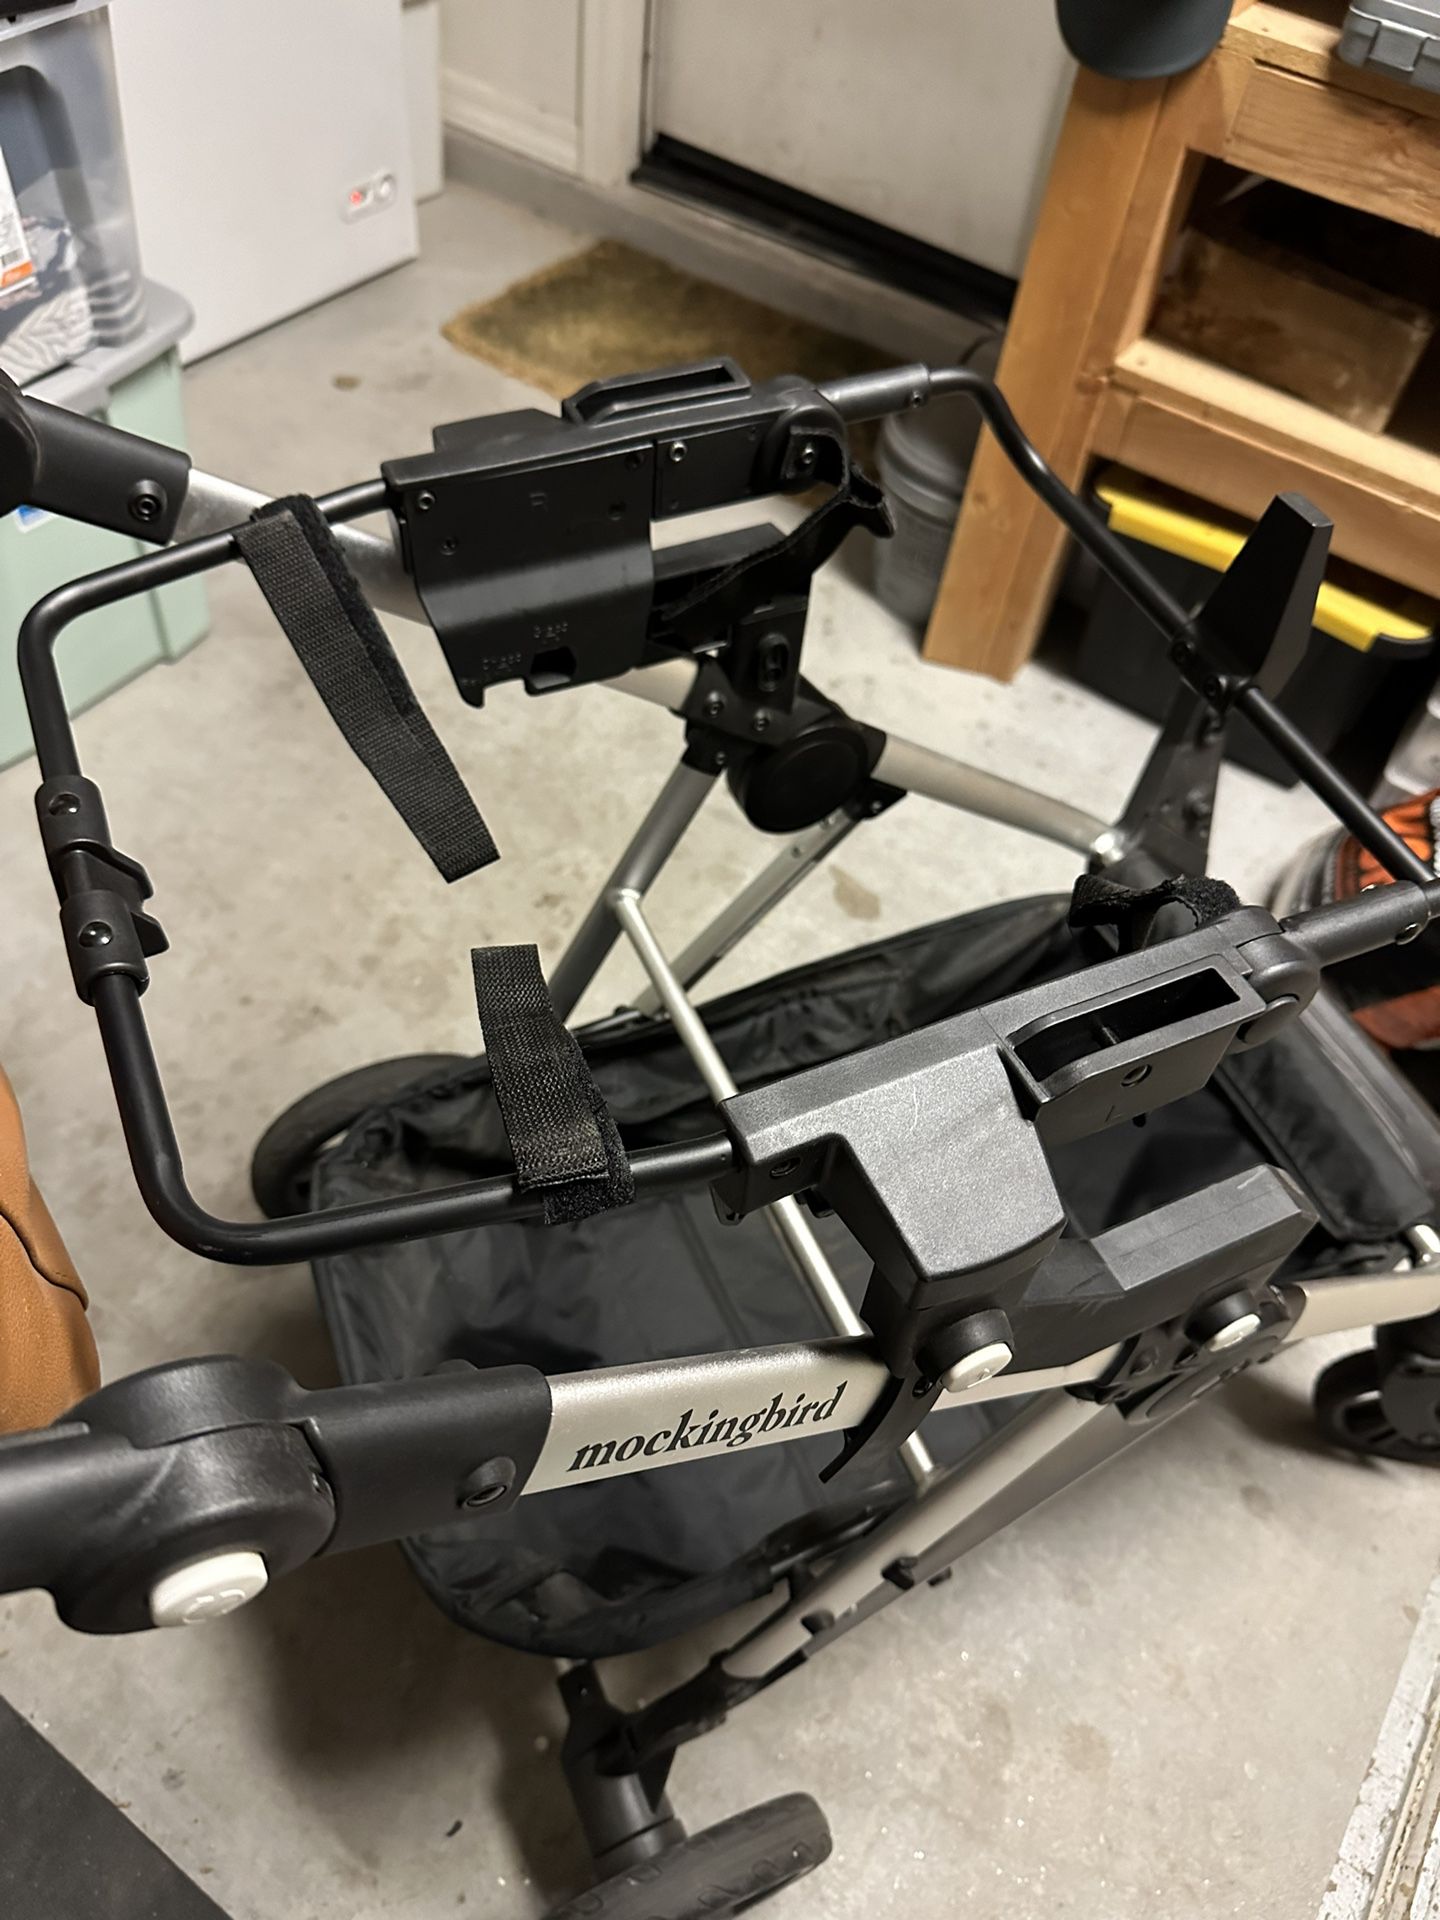 Mockingbird Stroller Car seat Adapter 